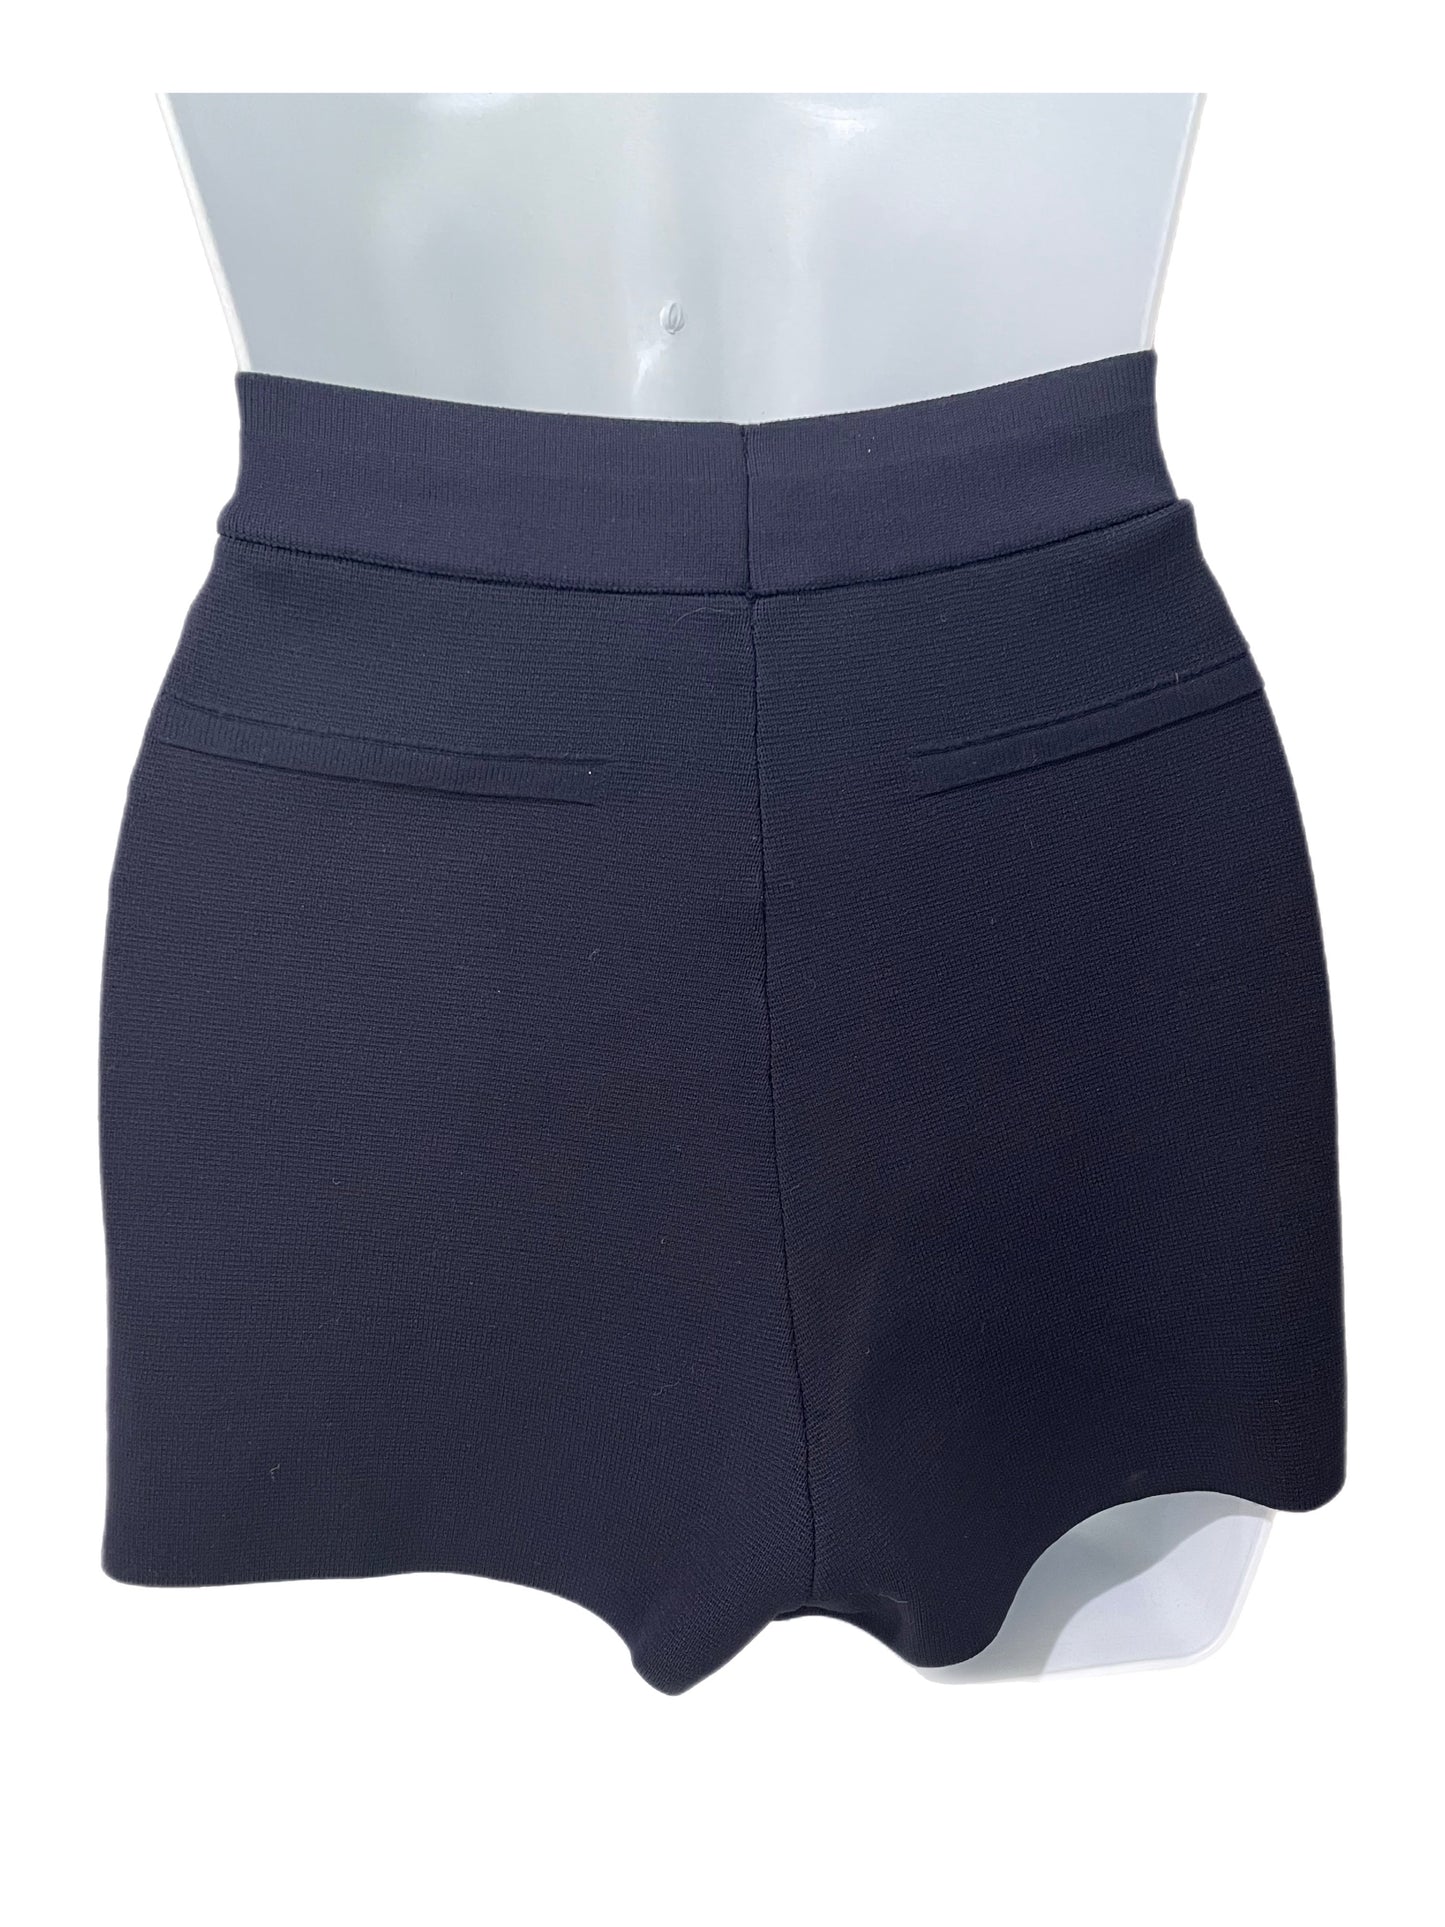 Shorts - Navy Knit-w/Belt Buckle By Zara